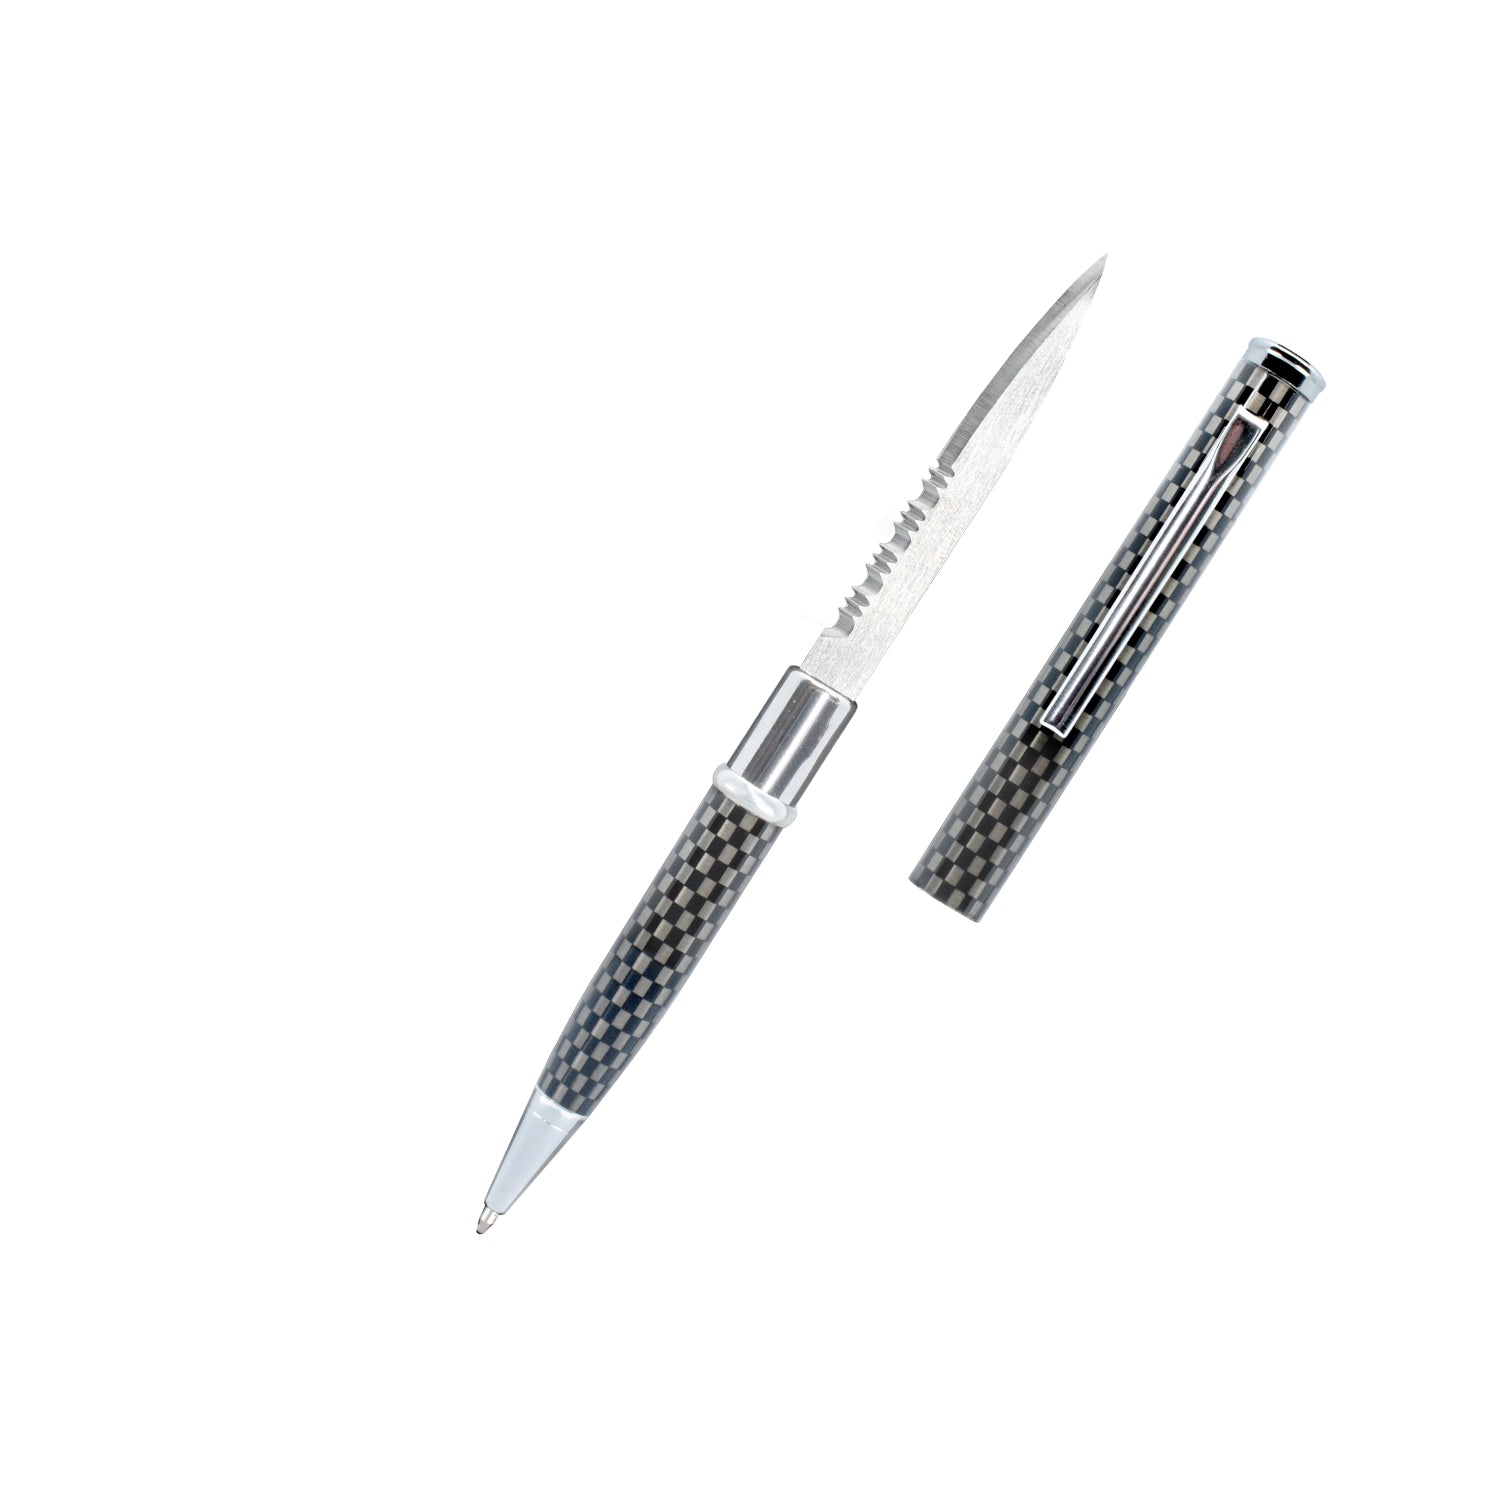 Executive Carbon Fiber Pen Knife